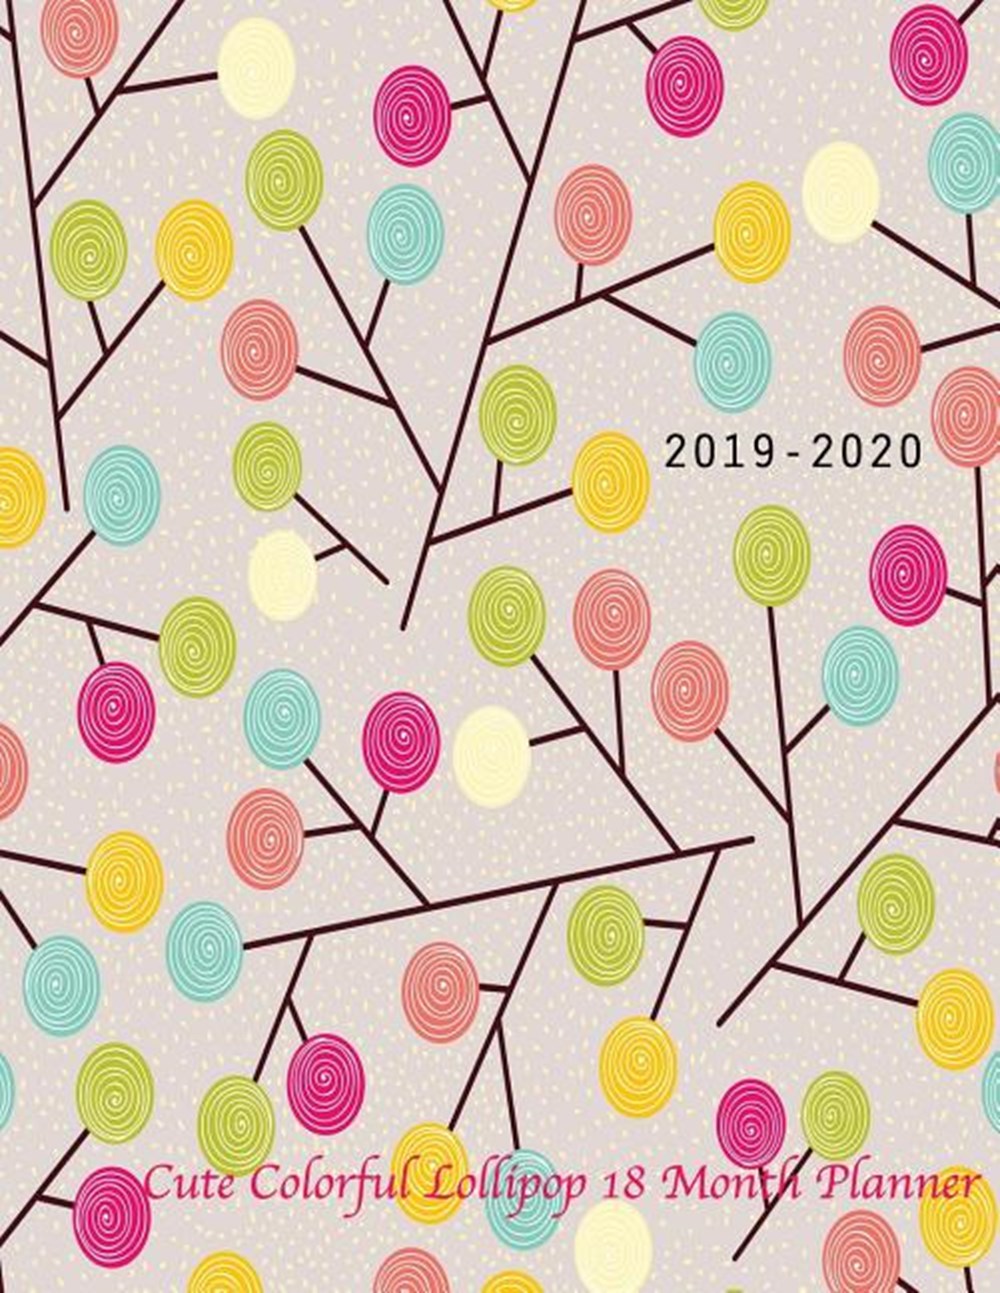 2019-2020 Cute Colorful Lollipop 18 month planner July 2019 To December 2020 Calendar Schedule Organ